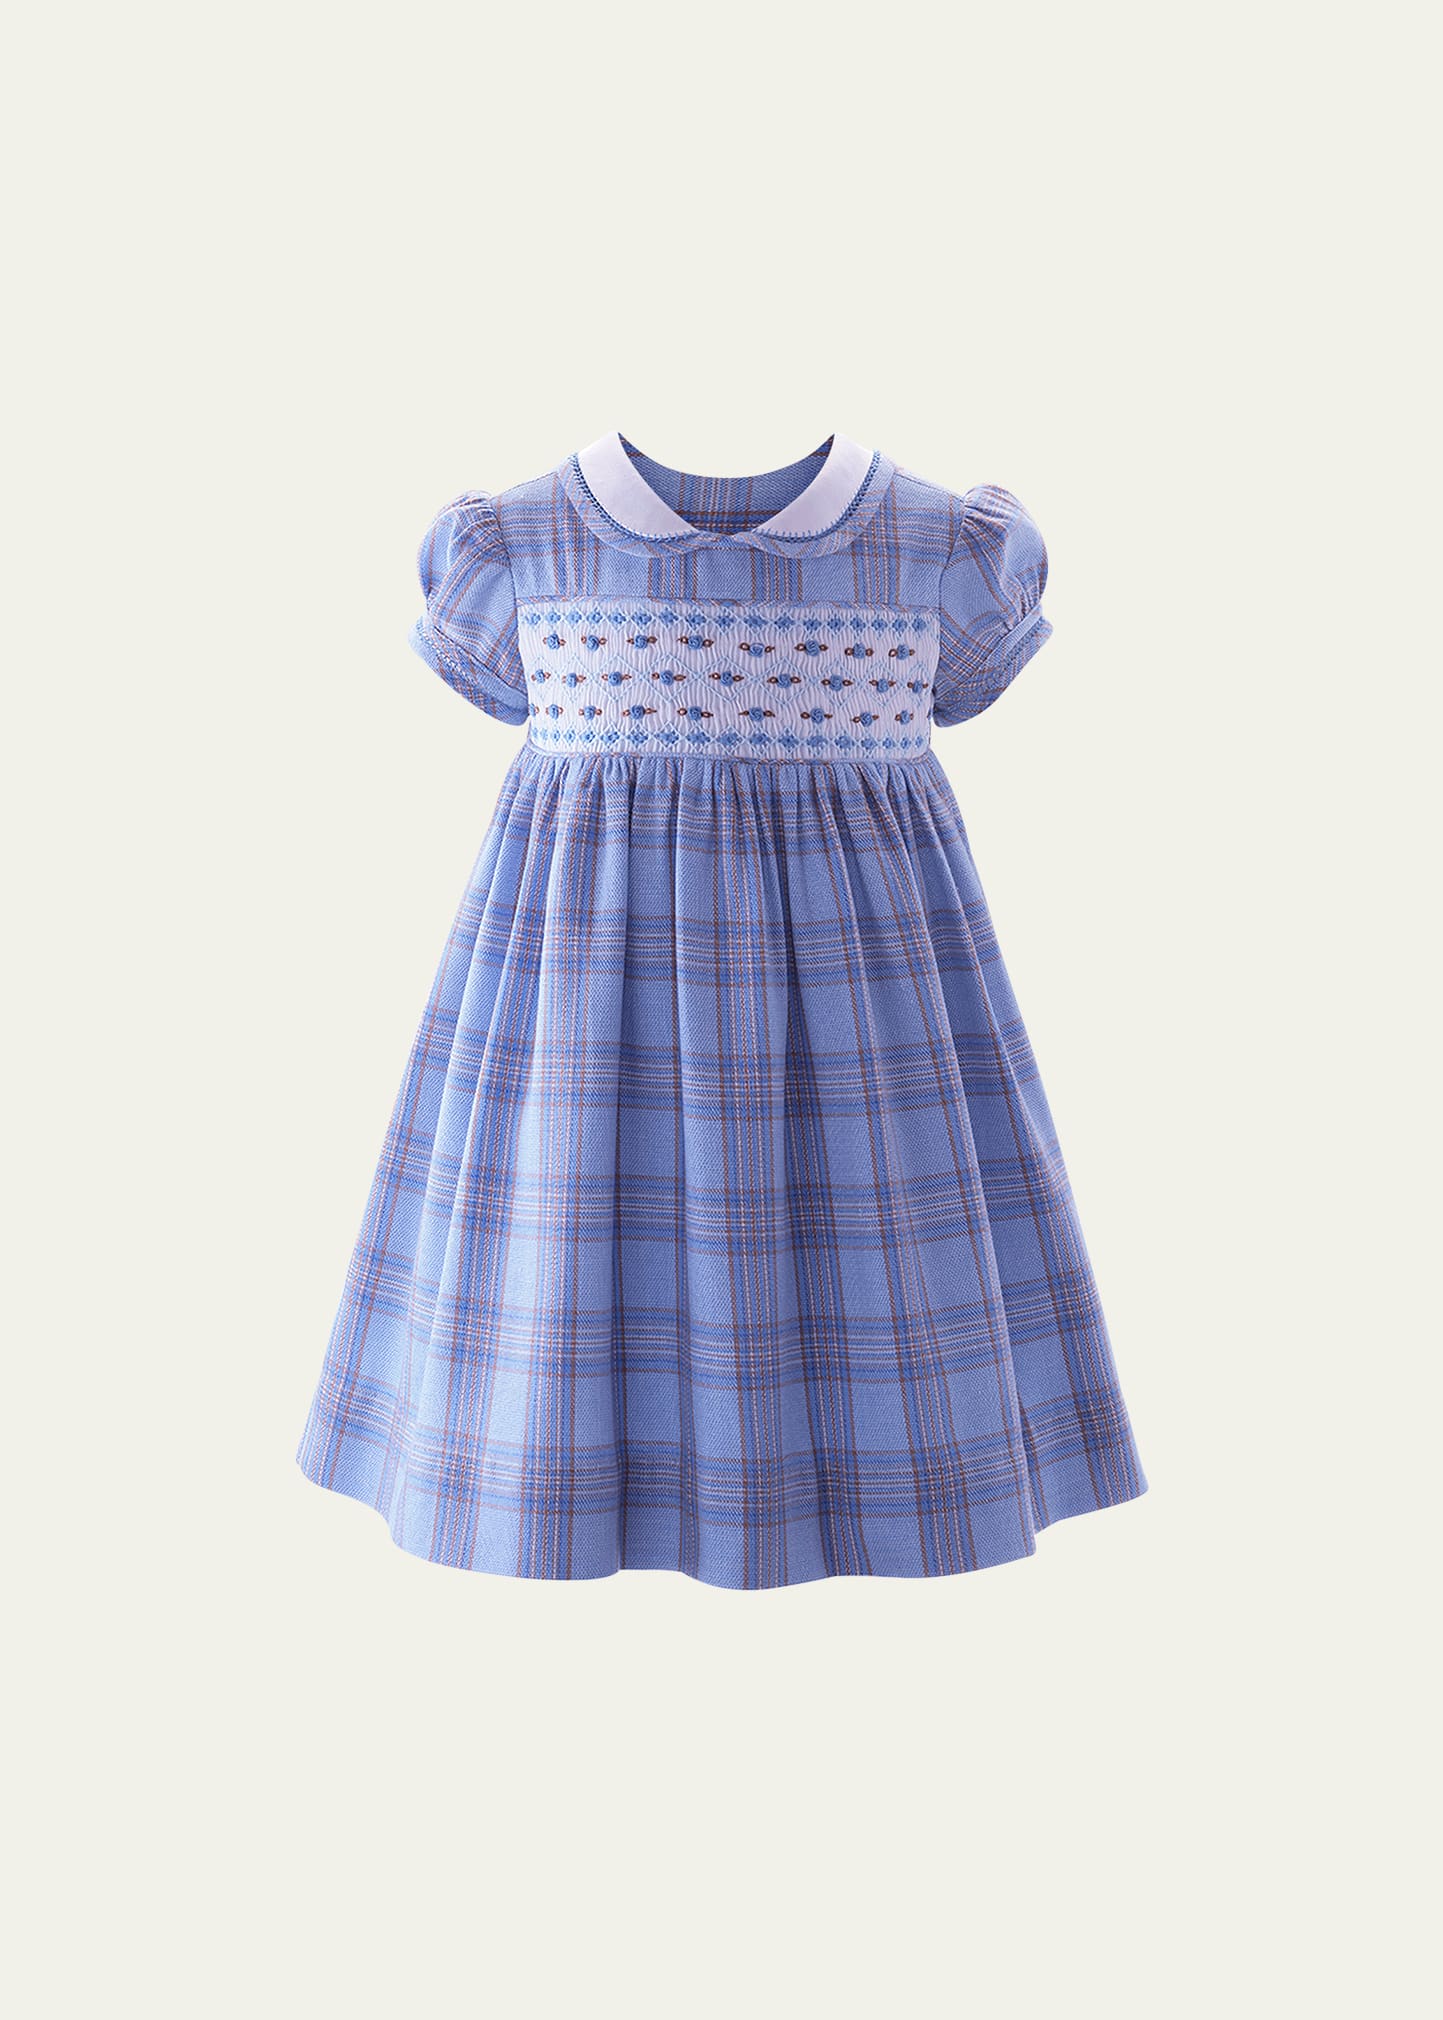 Girl's Smocked Tartan-Print Dress W/ Bloomers, Size 6M-24M